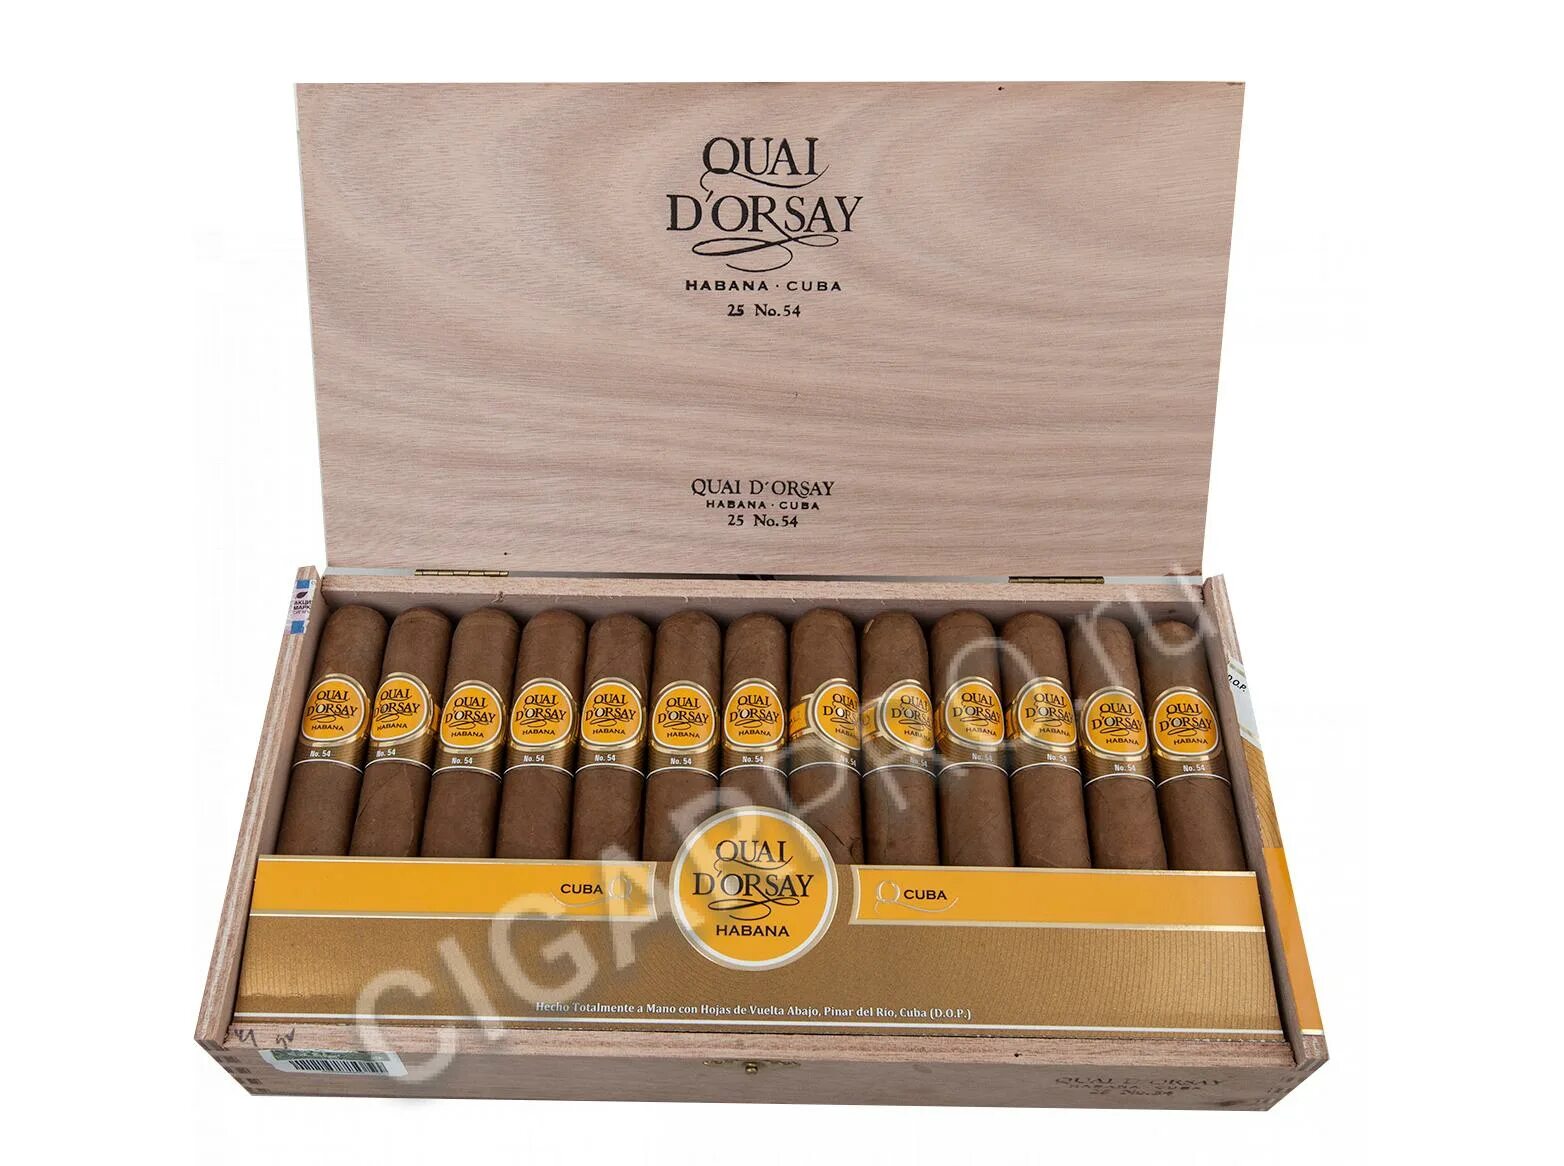 Сигарпро. Сигары d'Orsay #54. Quai d Orsay no.54. Коробка кубинских сигар. Totalmente a mano сигары.